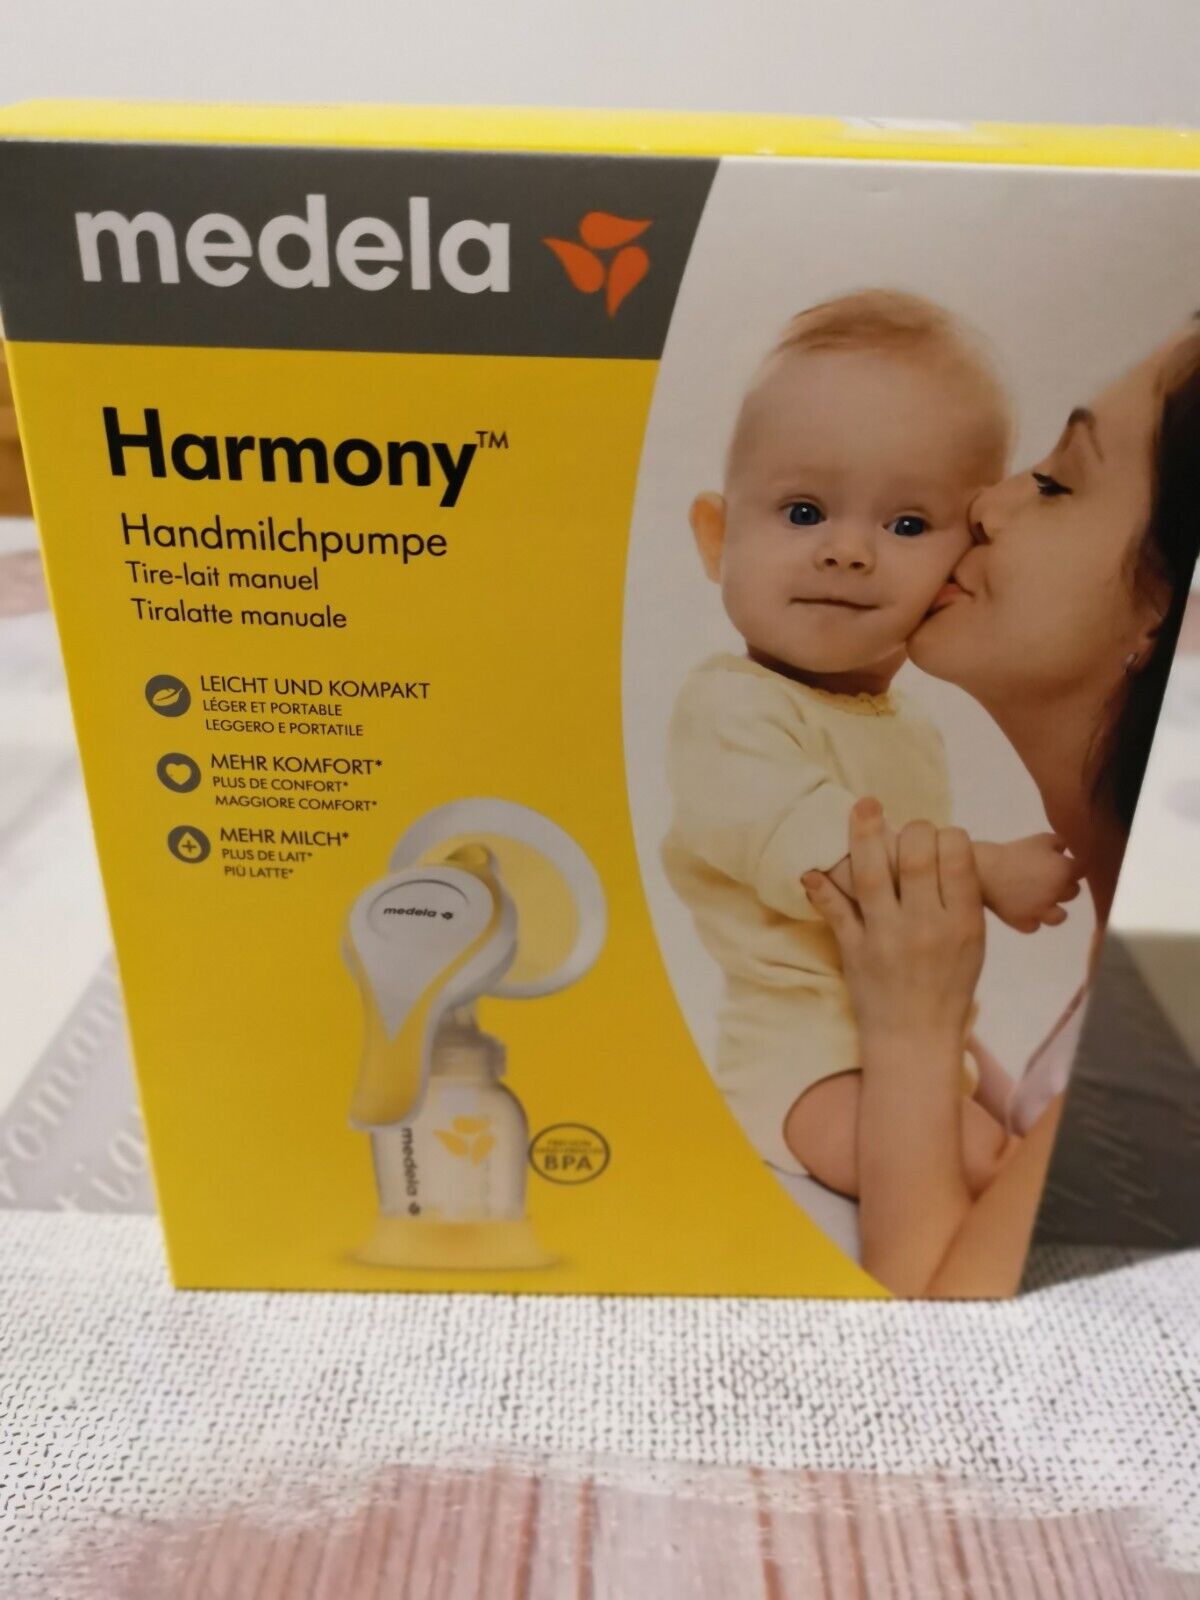 Medela – Tiralatte Manuale Harmony Medela Br